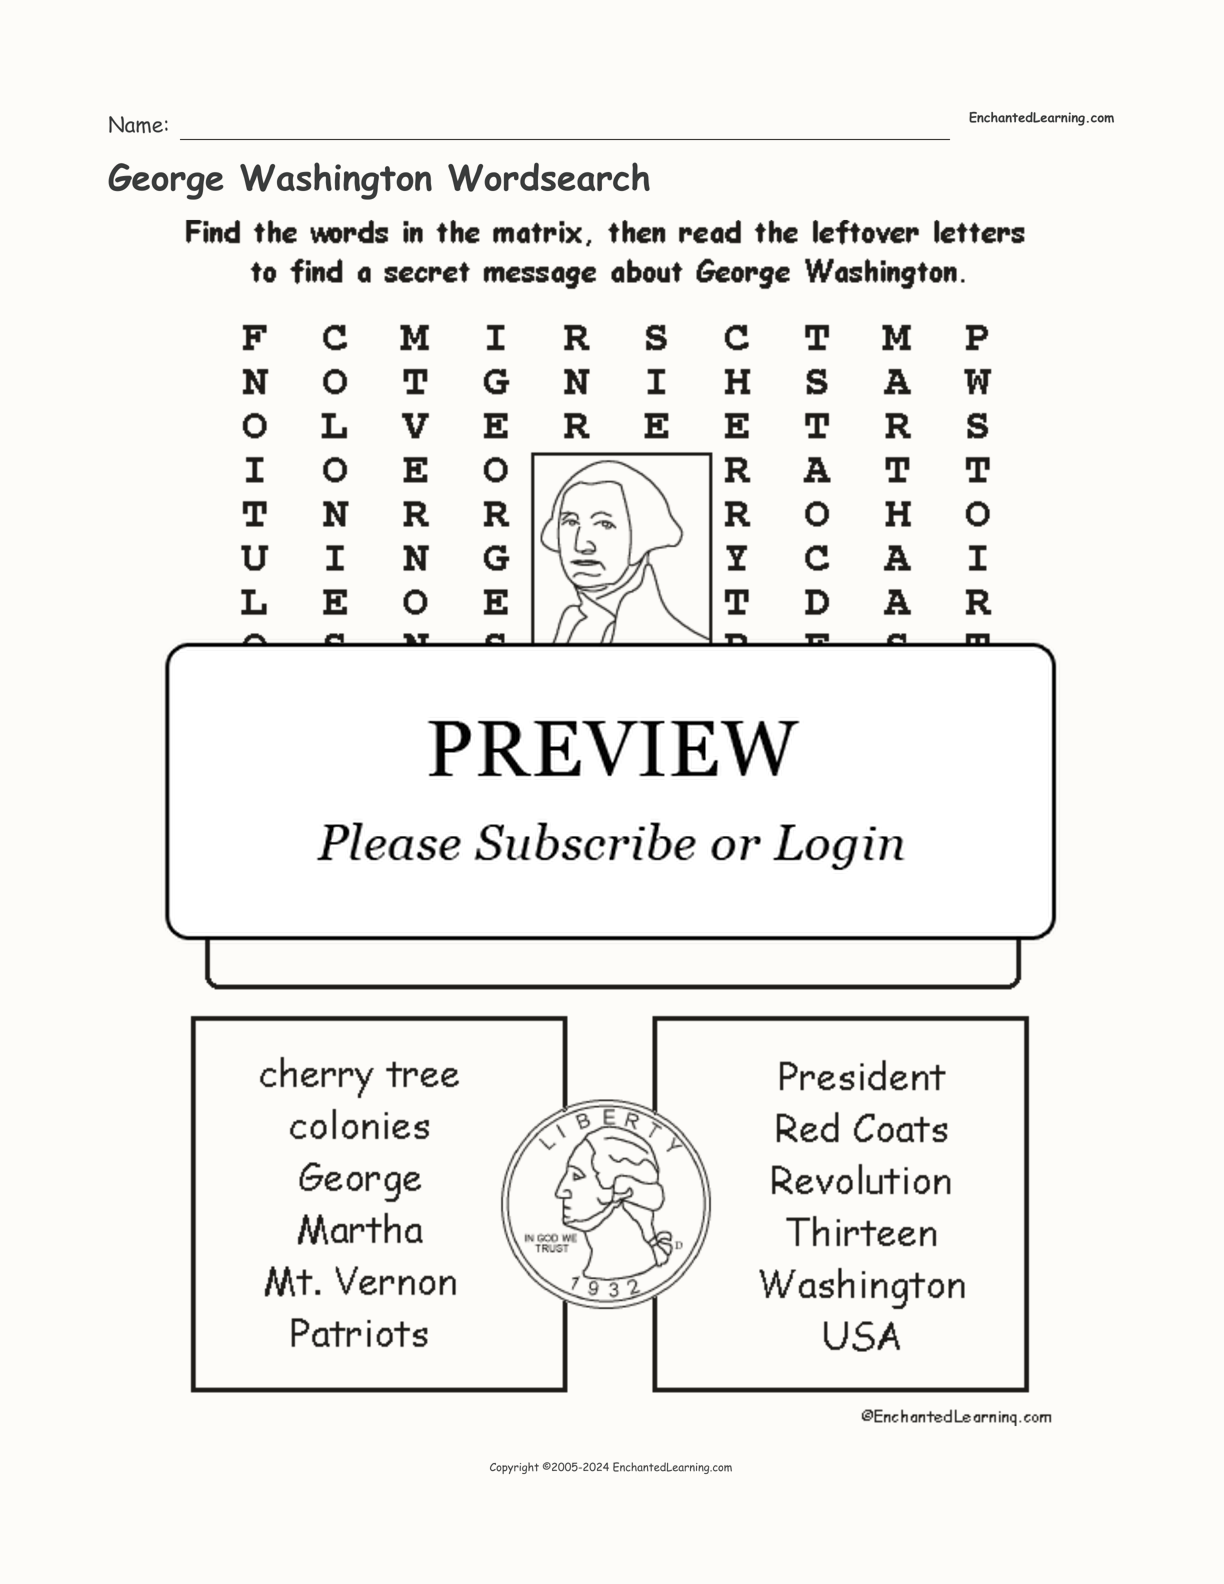 George Washington Wordsearch interactive worksheet page 1